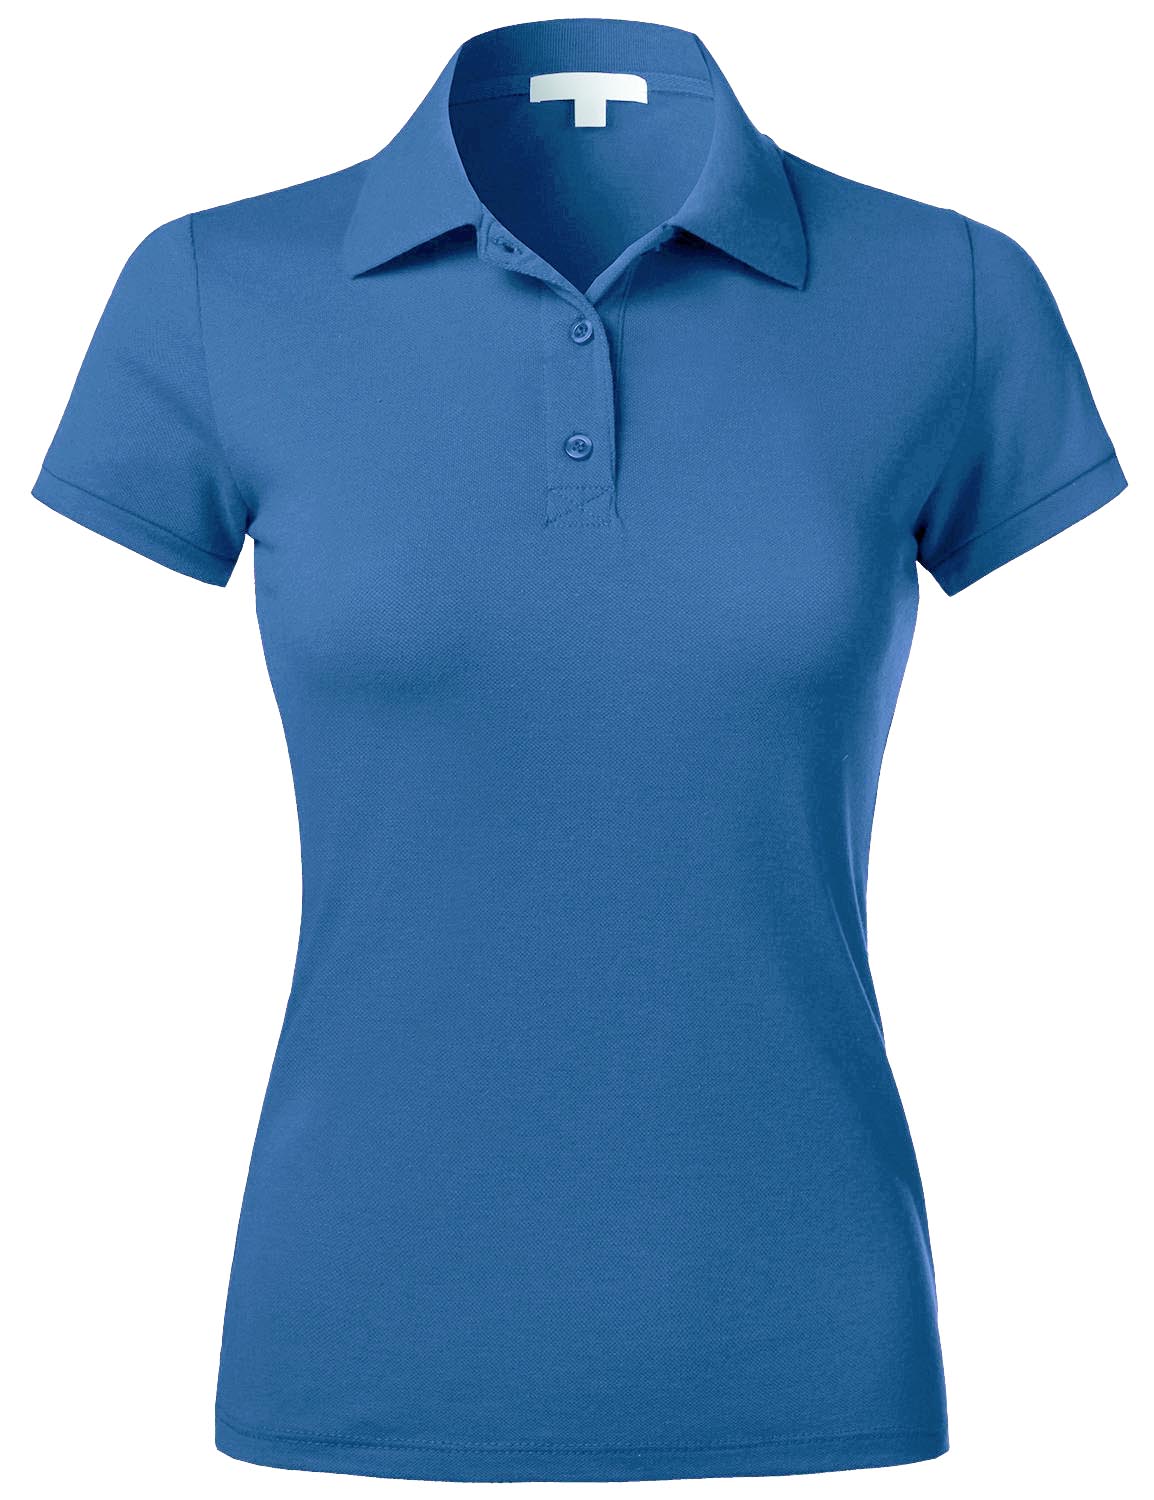 polo shirts for women ec womens polo shirts short sleeve slim fit 3ecd0001 mhksyxi